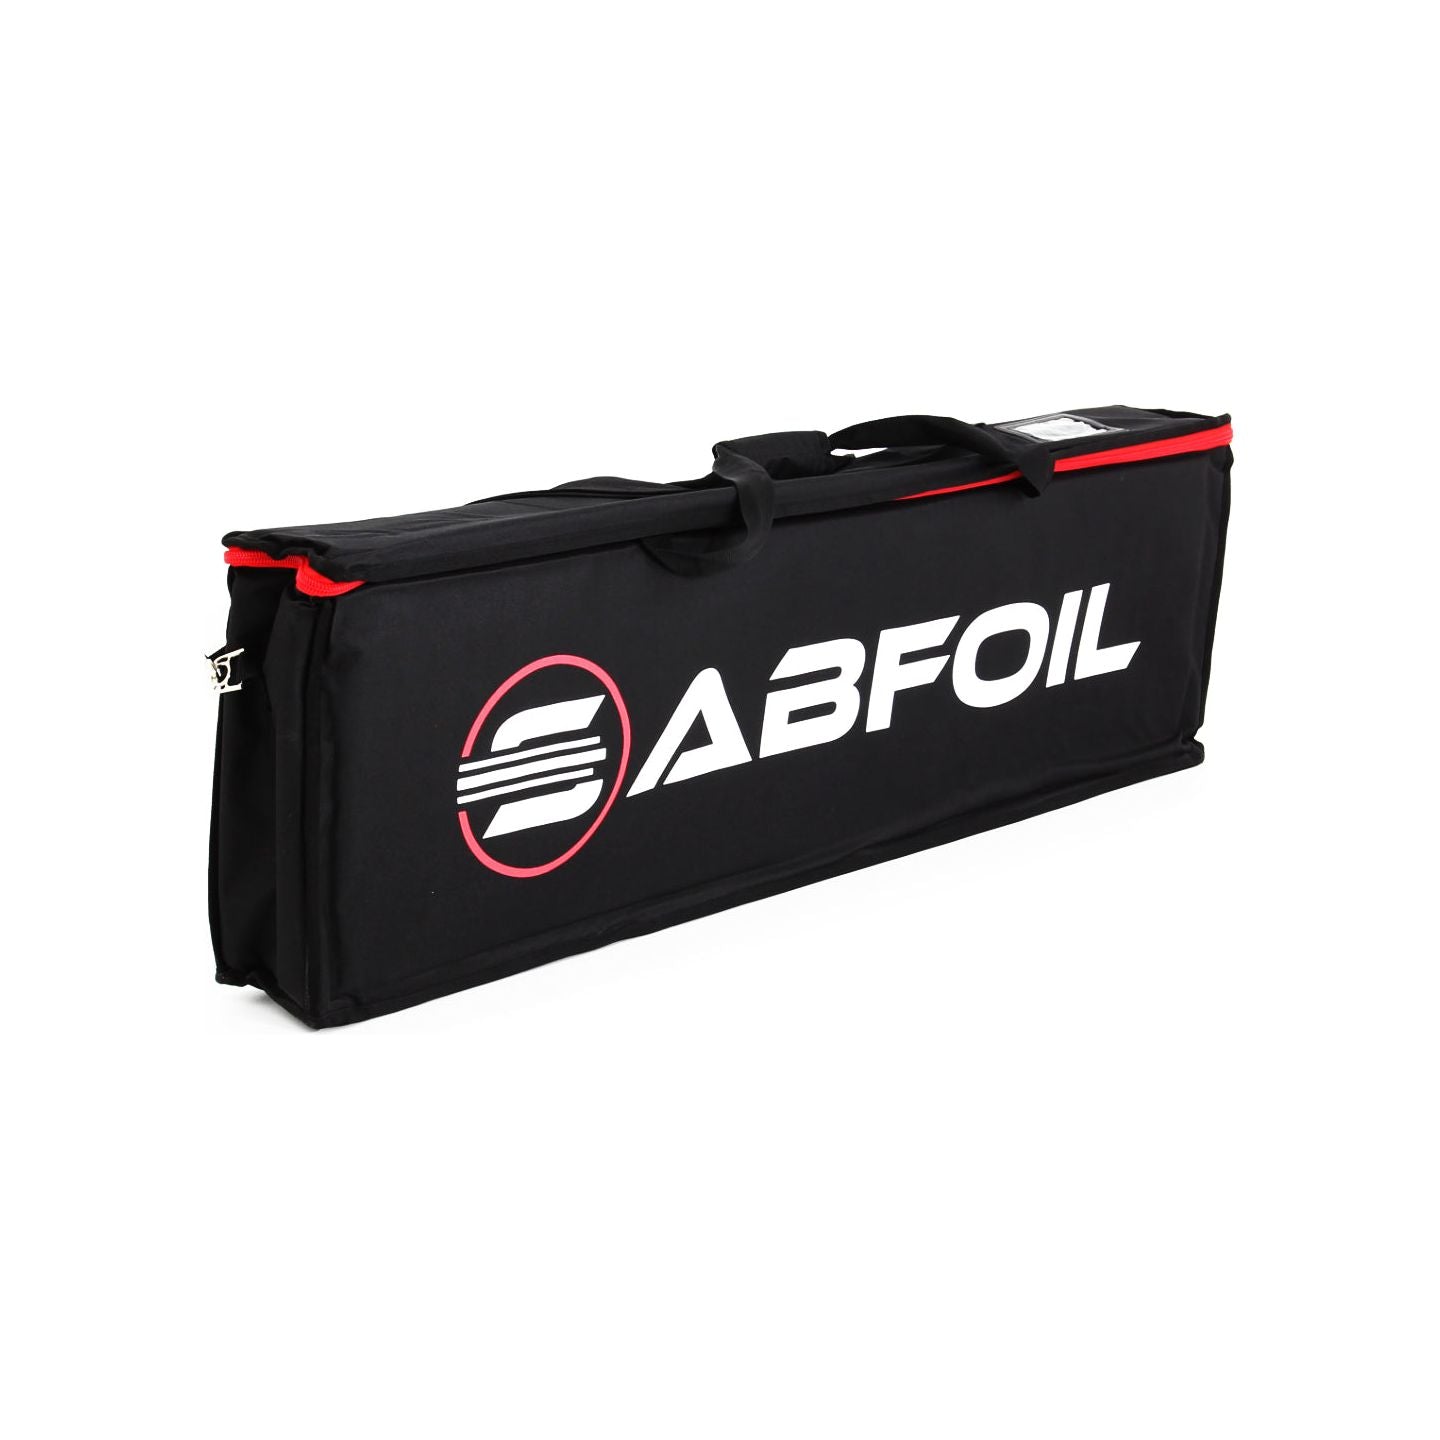 Sabfoil Razor Pro 875/86P | Hydrofoil Set